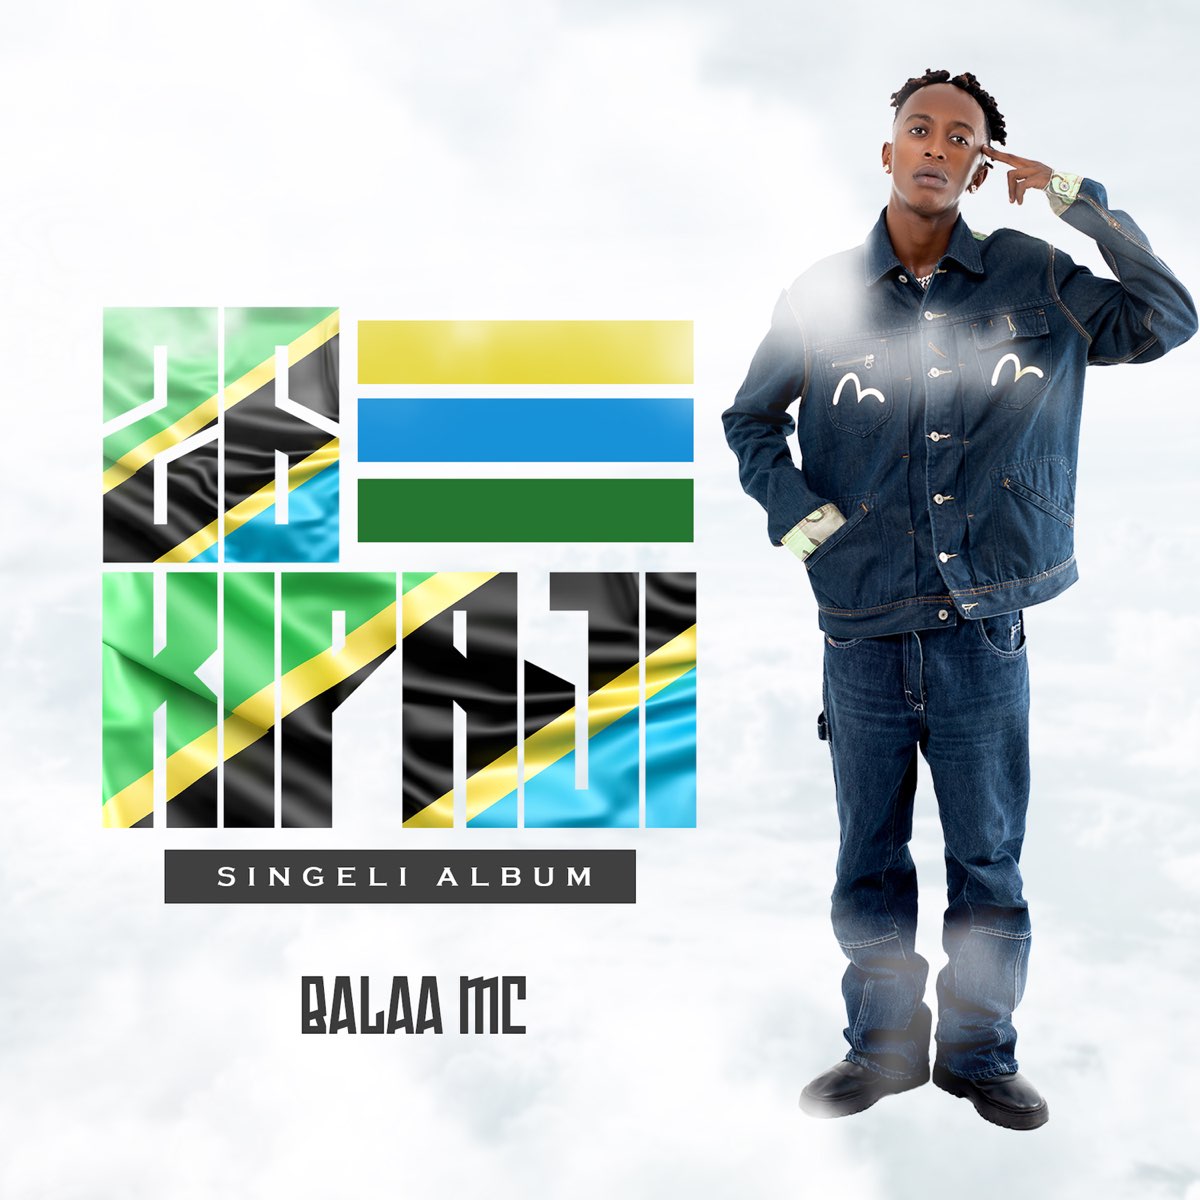 ‎26kipaji Singeli Album By Balaa Mc On Apple Music 